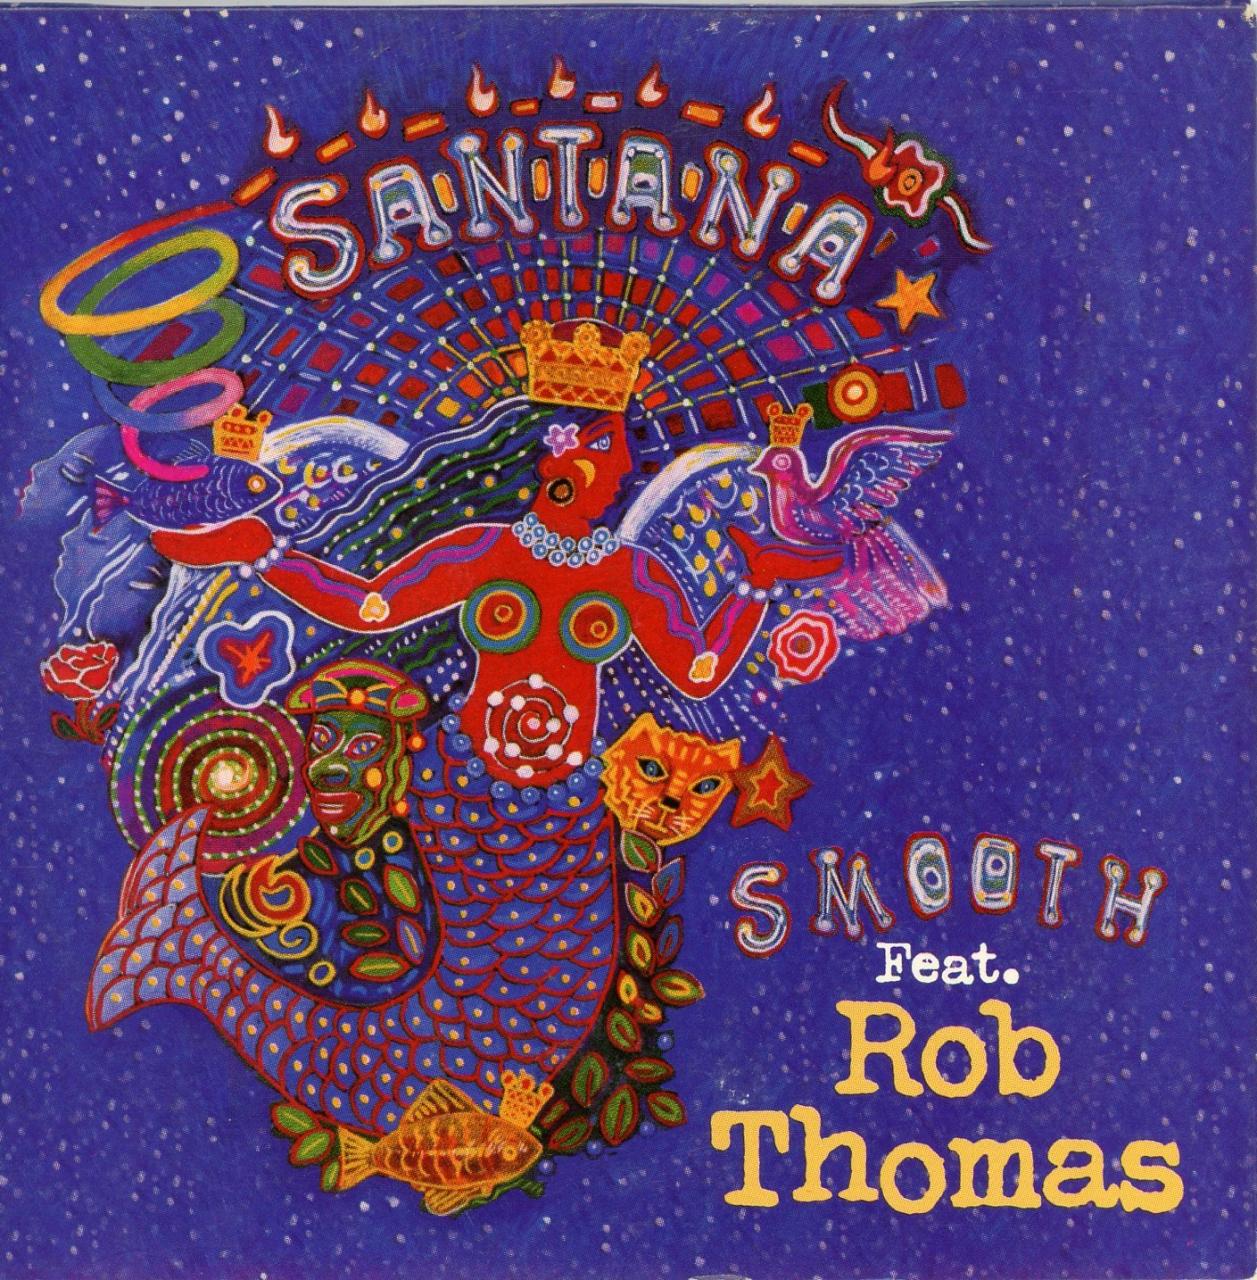 Santana - Smooth Ft. Rob Thomas mp3 download